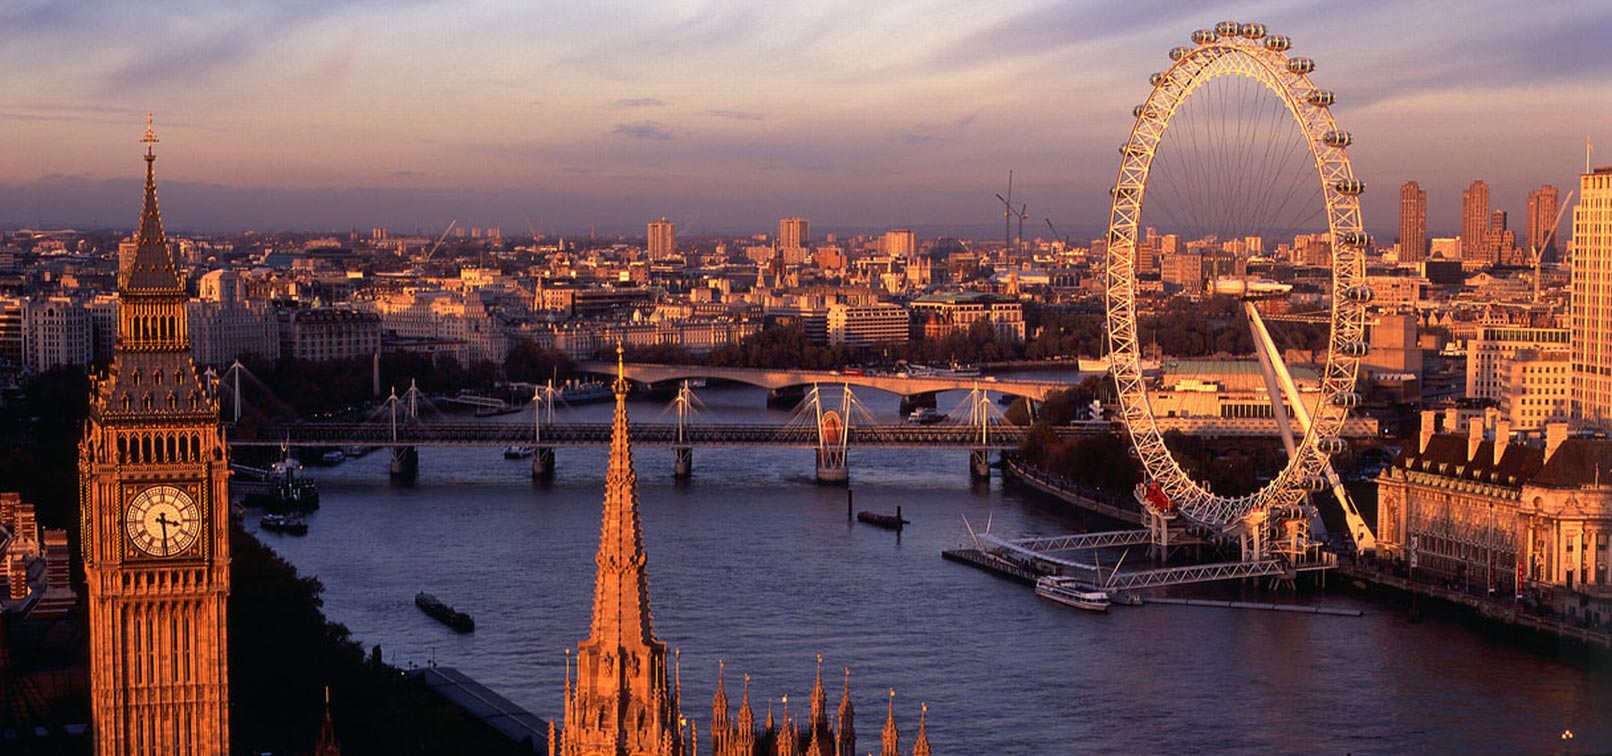 Travel destinations of a lifetime: London England (photo www.excel-london.co.uk)